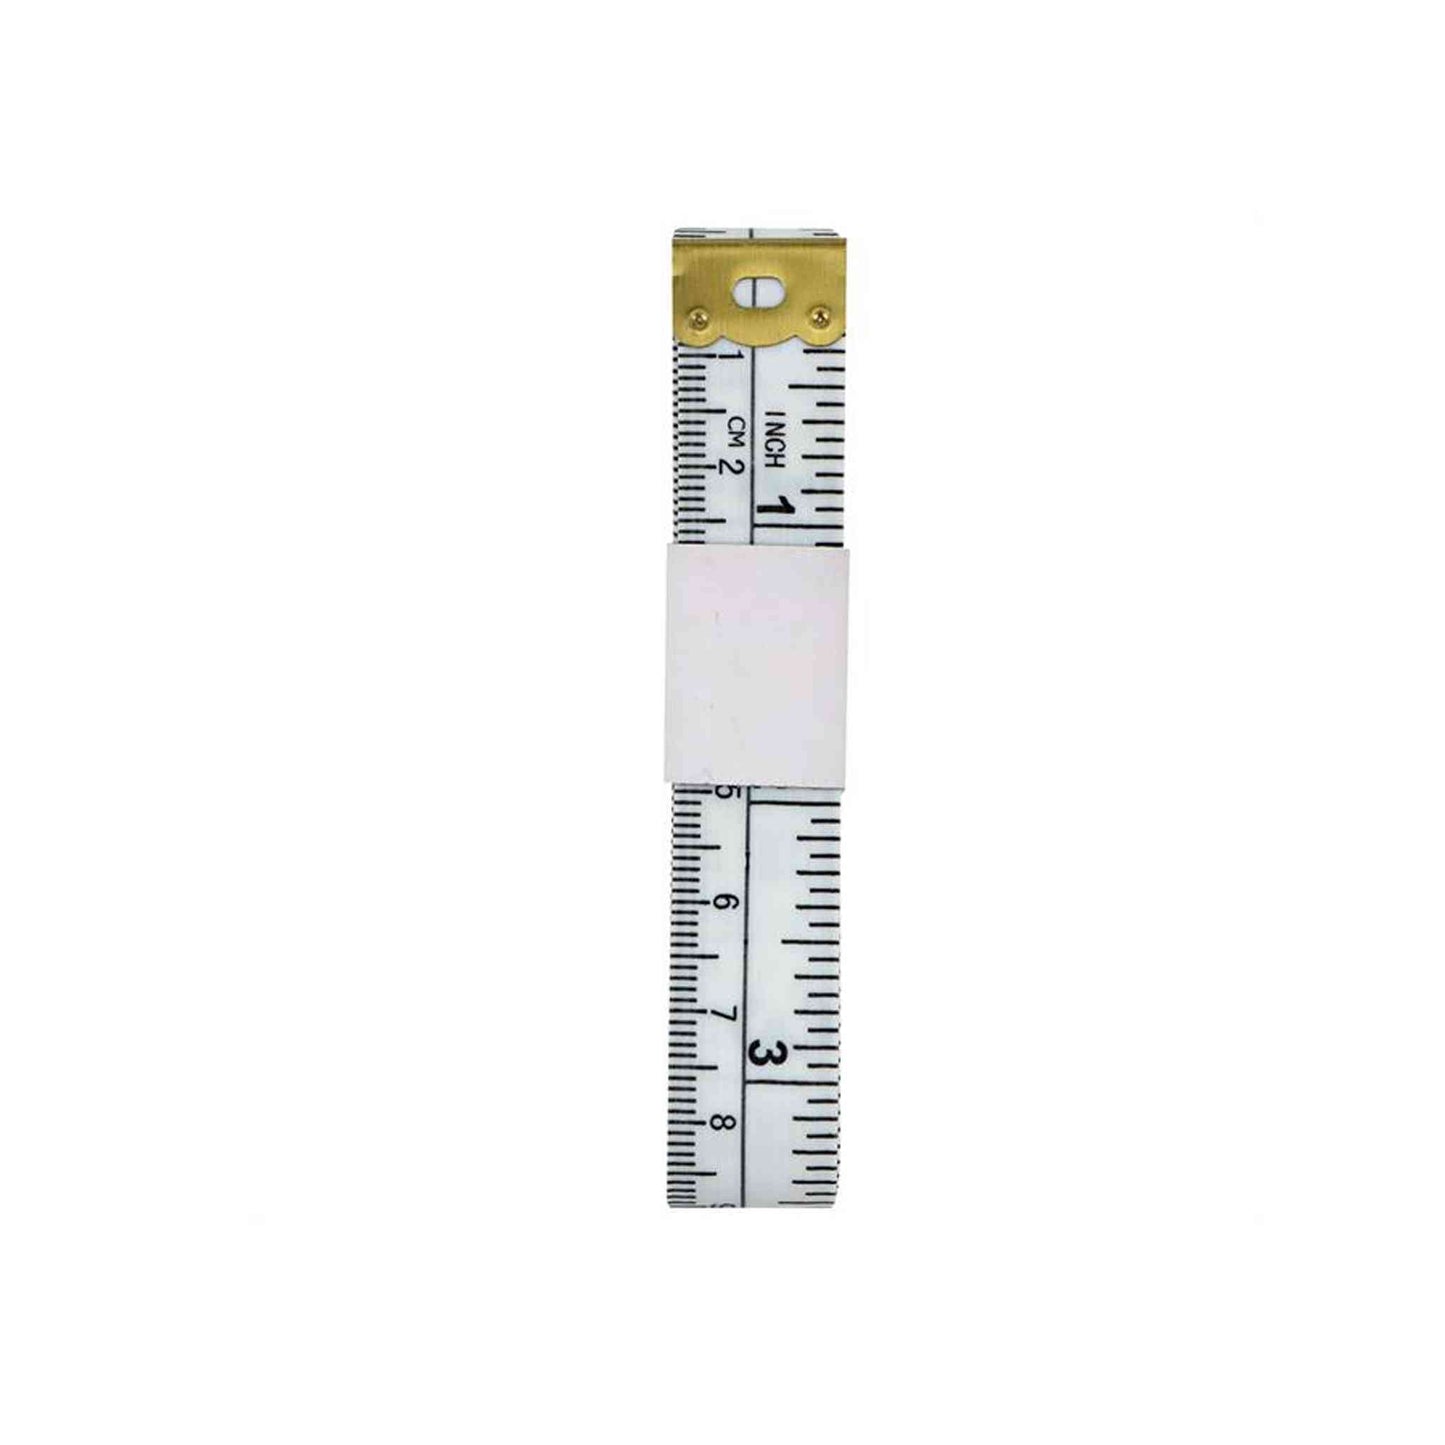 1.5M Color Soft measuring tape garment measuring ruler scale ruler